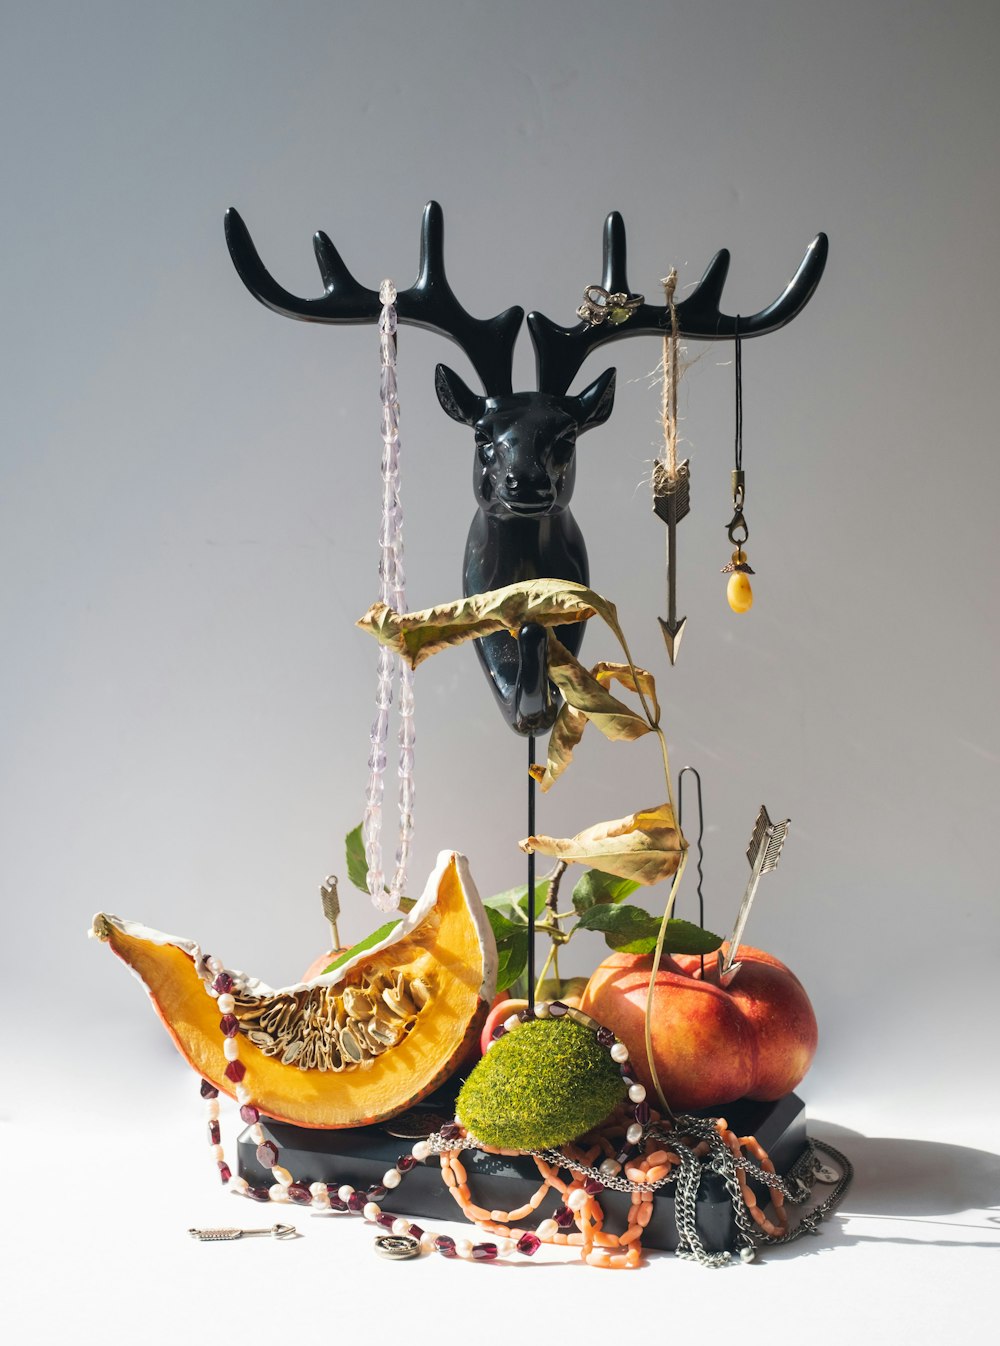 a sculpture of a deer head, fruit, and beads